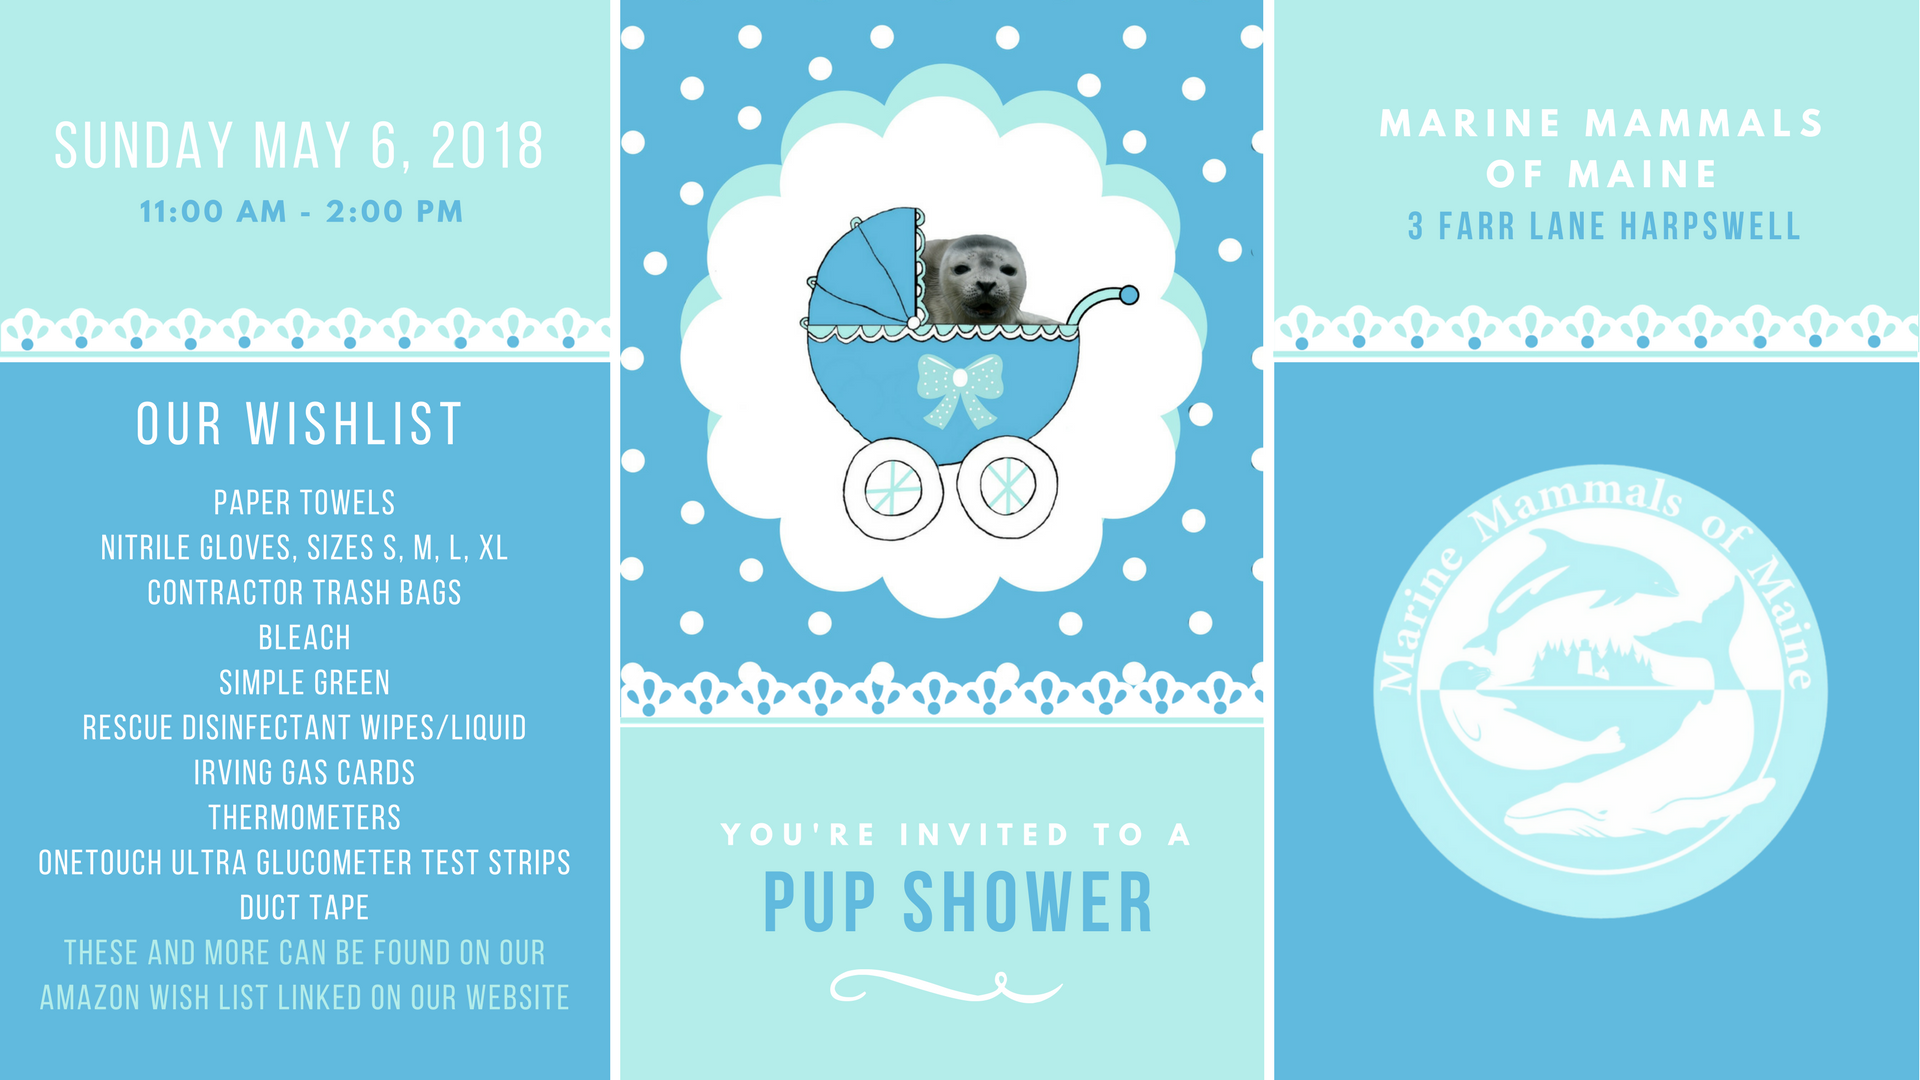 Facebook event pup shower